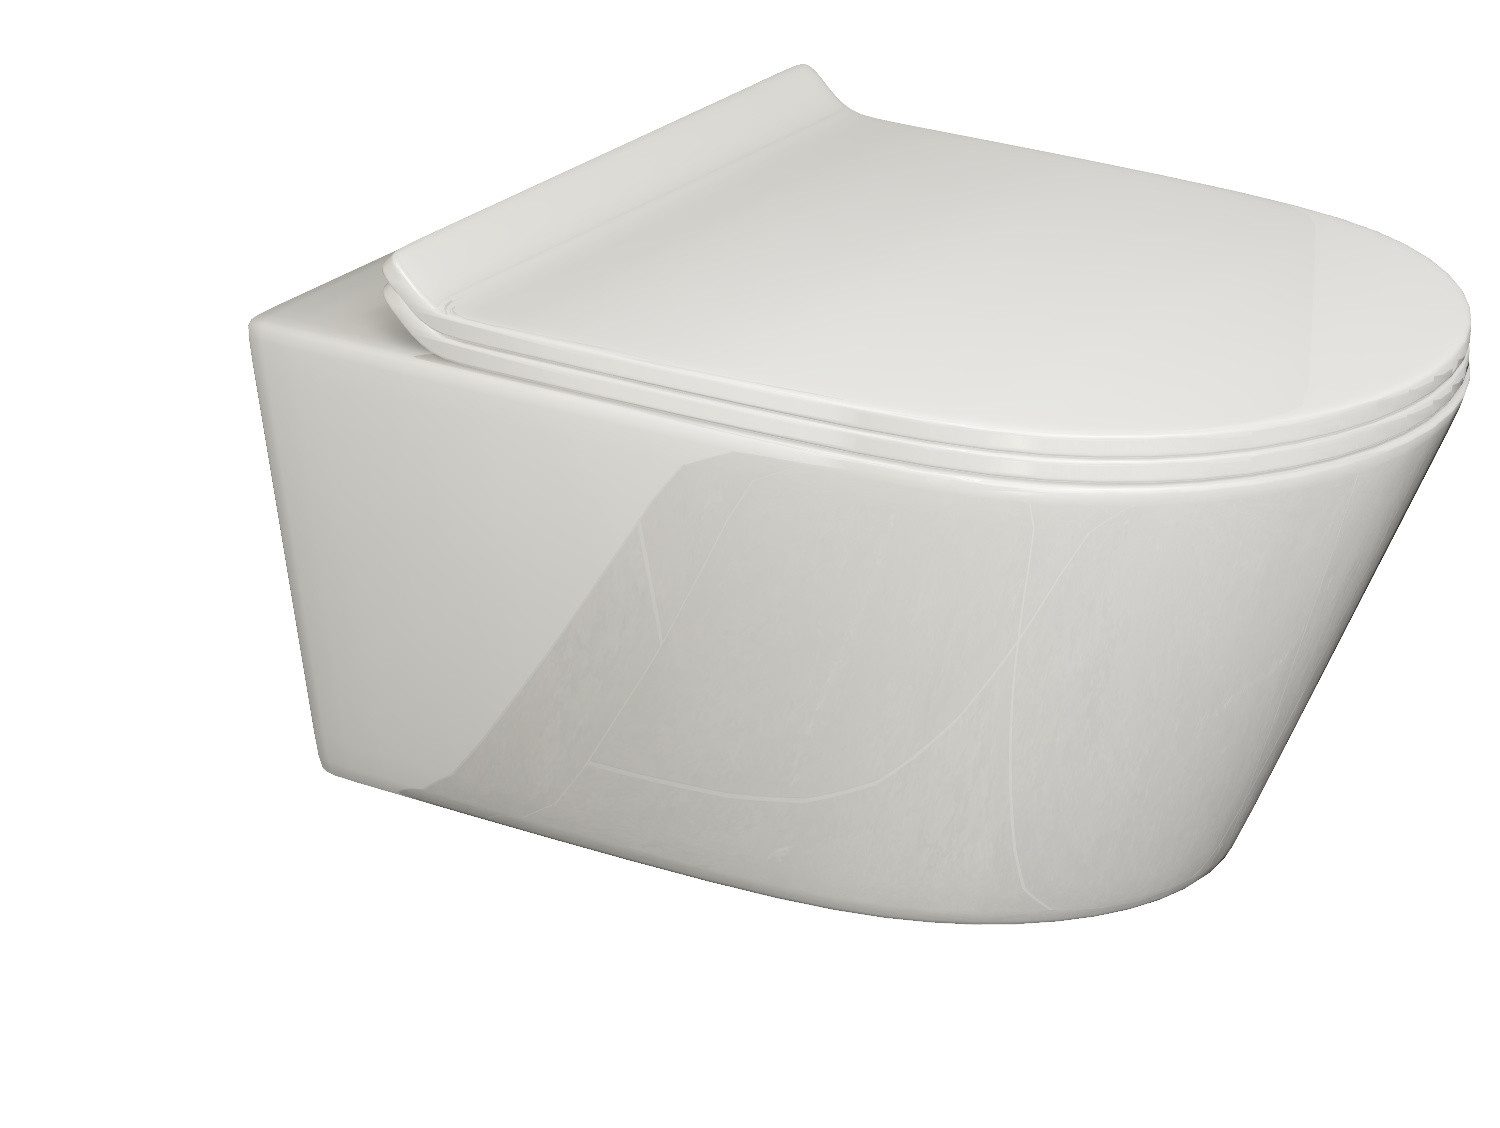 SSWW Tiefspül-WC spülrandlose Toilette mit WC-Sitz weiß Hänge-WC Tiefspüler, wandhängend, Abgang waagerecht, Sanitärkeramik